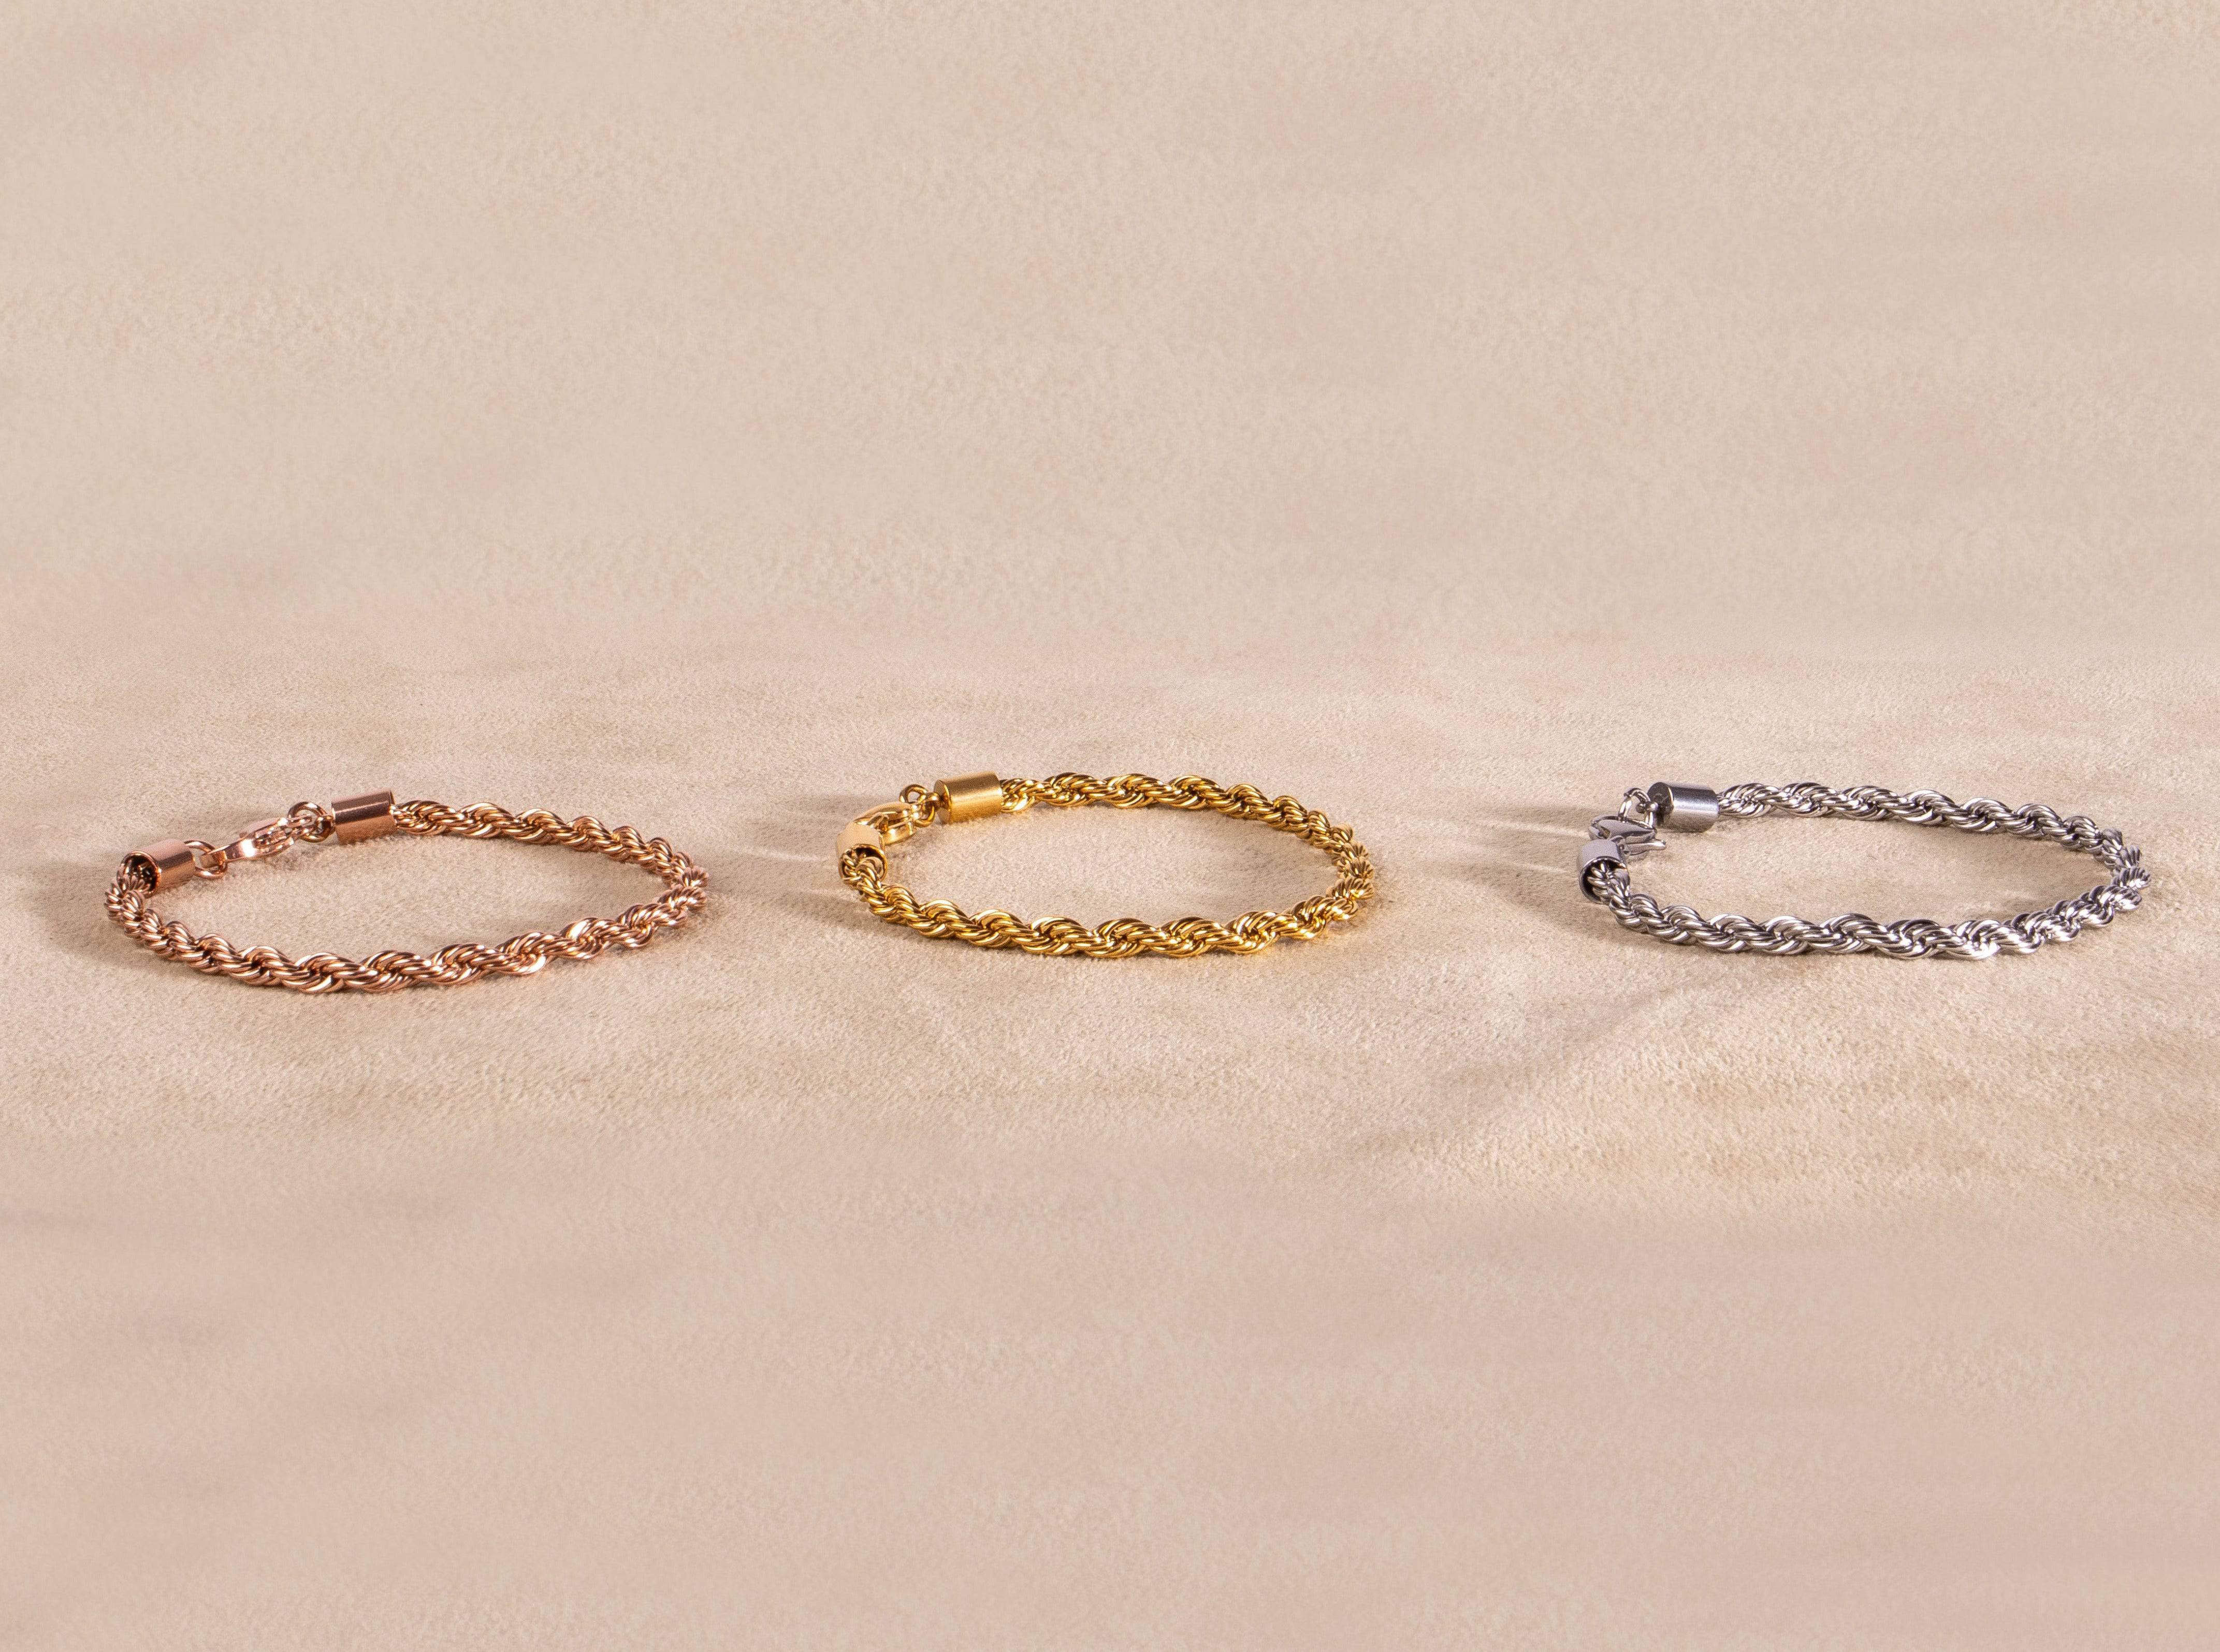 Seil Armband twisted in gold, silber oder roségold - NooeBerlin